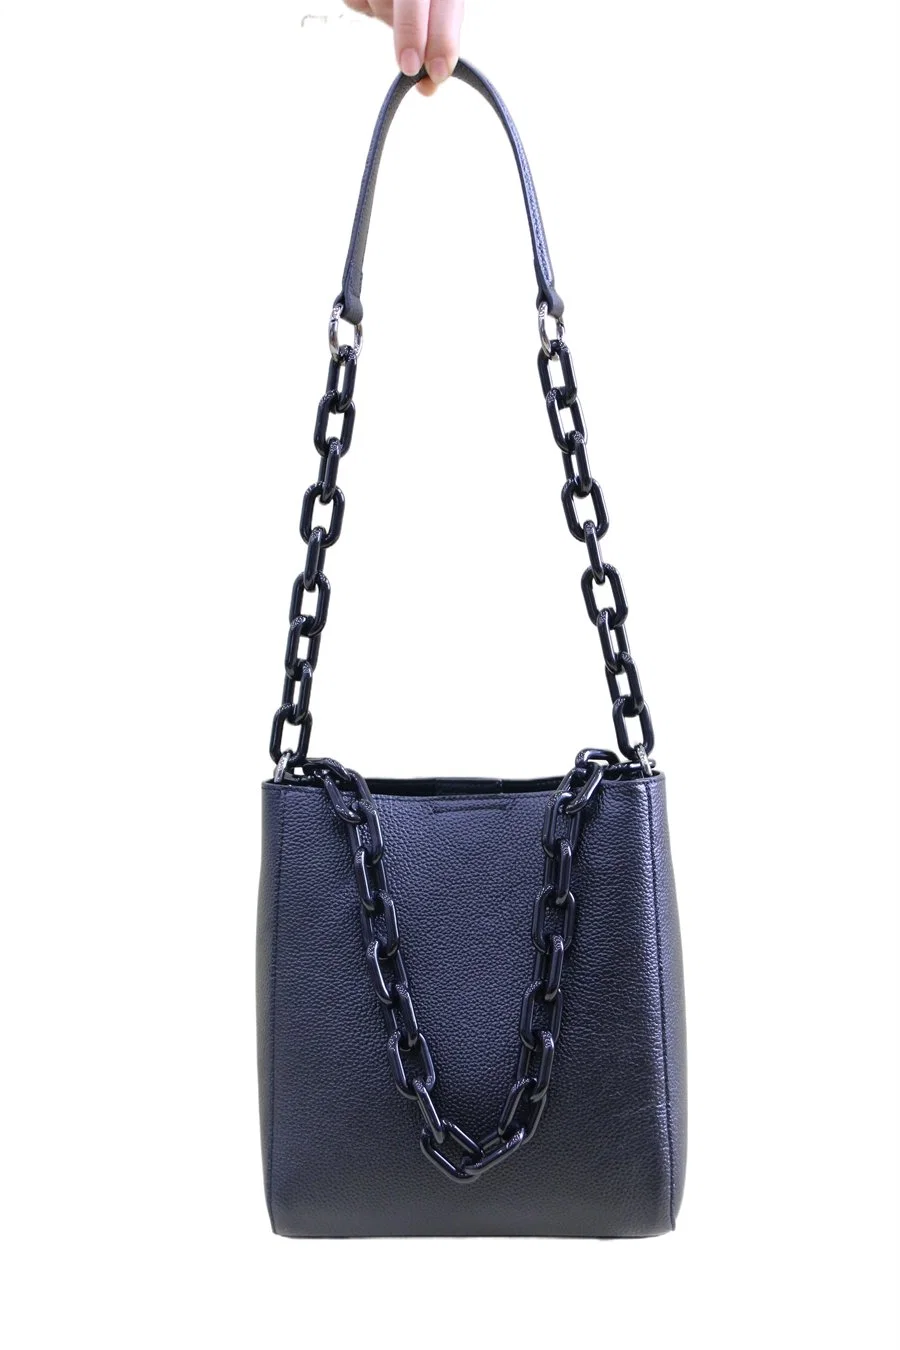 New Trendy Luxury Design Top Quality Leather Shoulder Women Handbag